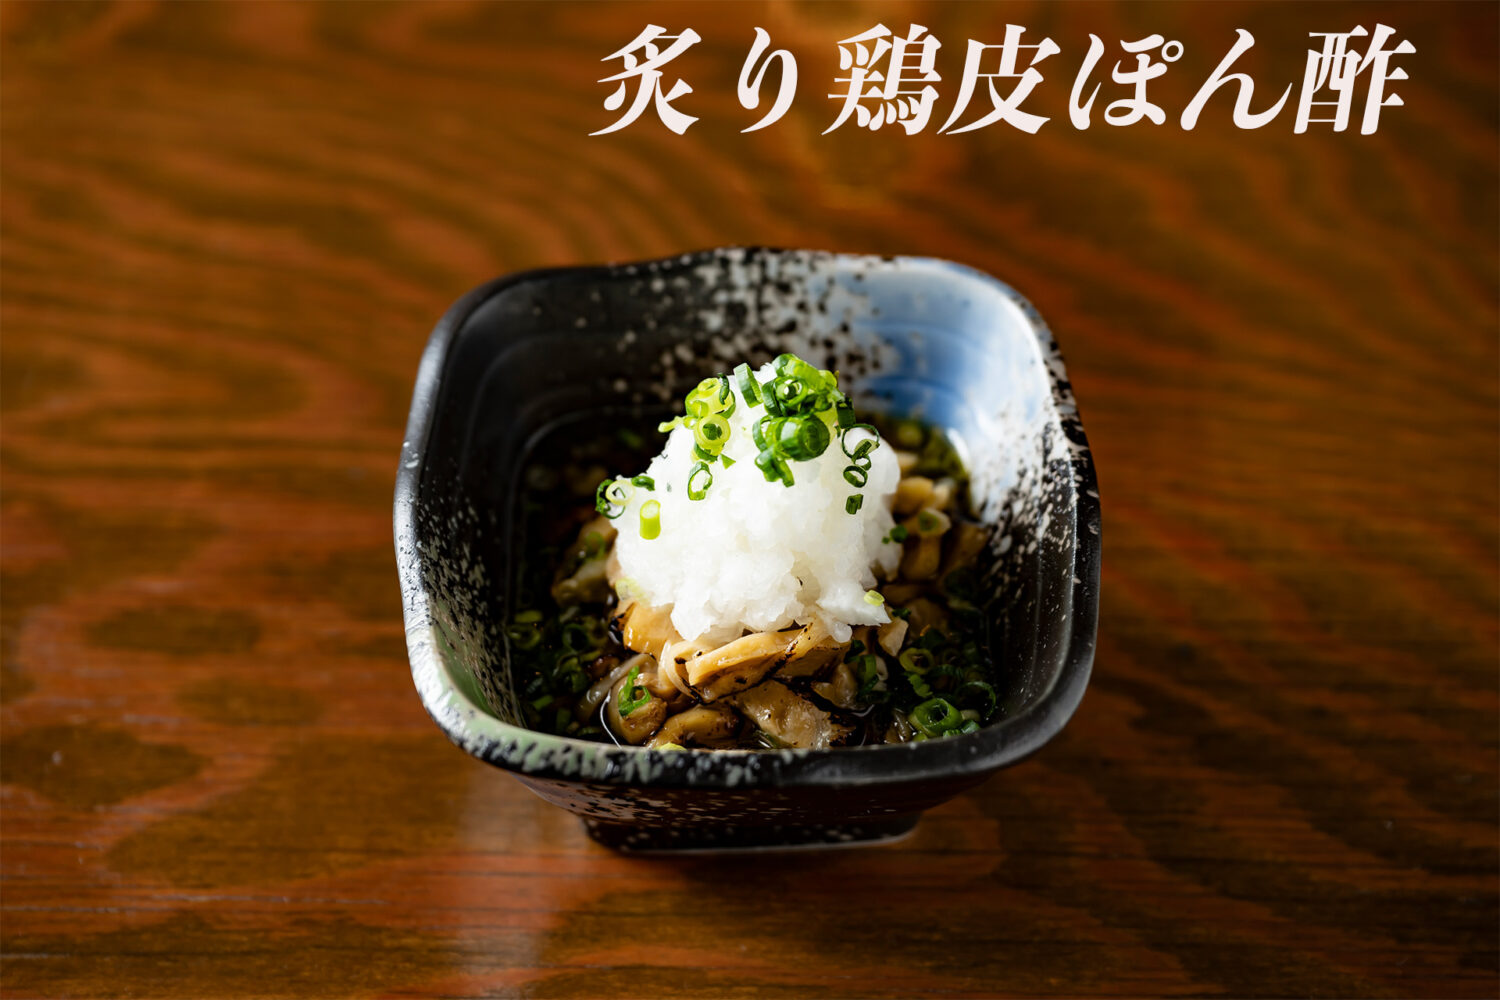 Toasted Chicken Skin with Ponzu Sauce　炙り鶏皮ぽん酢　aburi torikawa ponzu